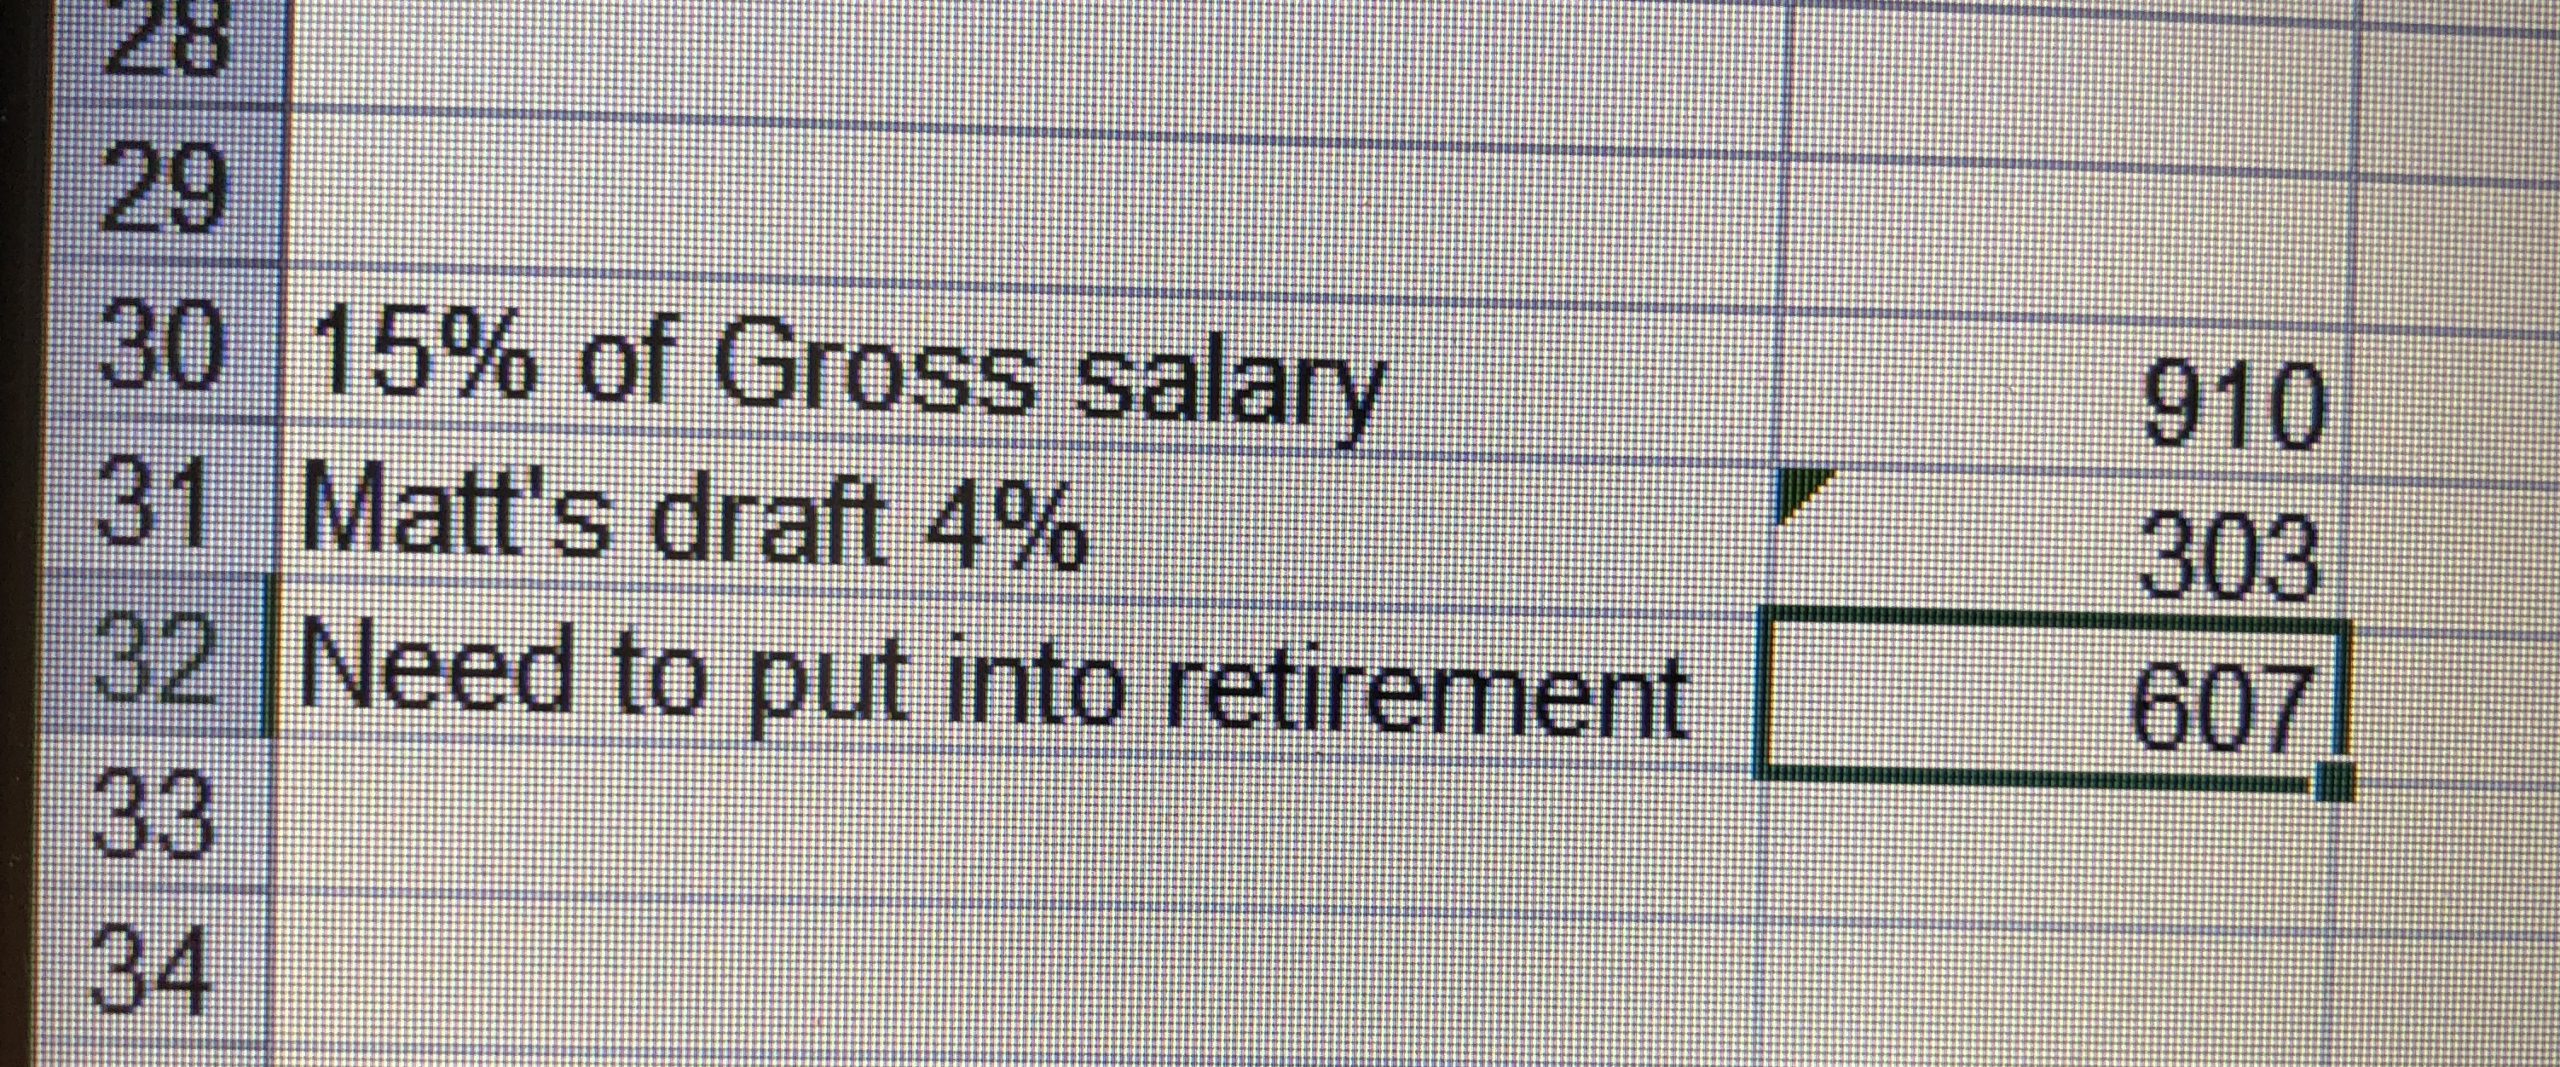 15% into Retirement Goal